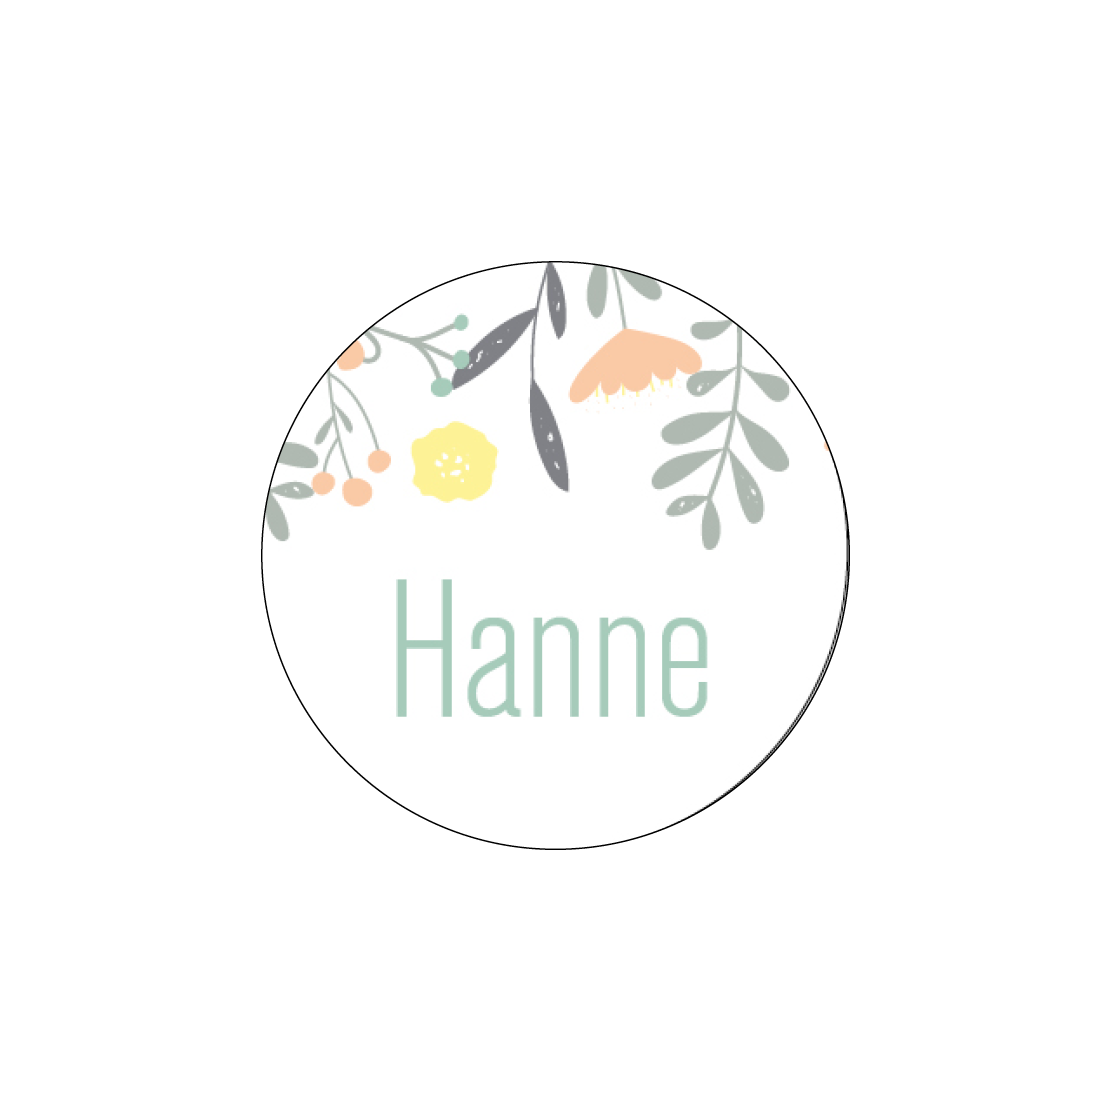 Hanne - Sticker